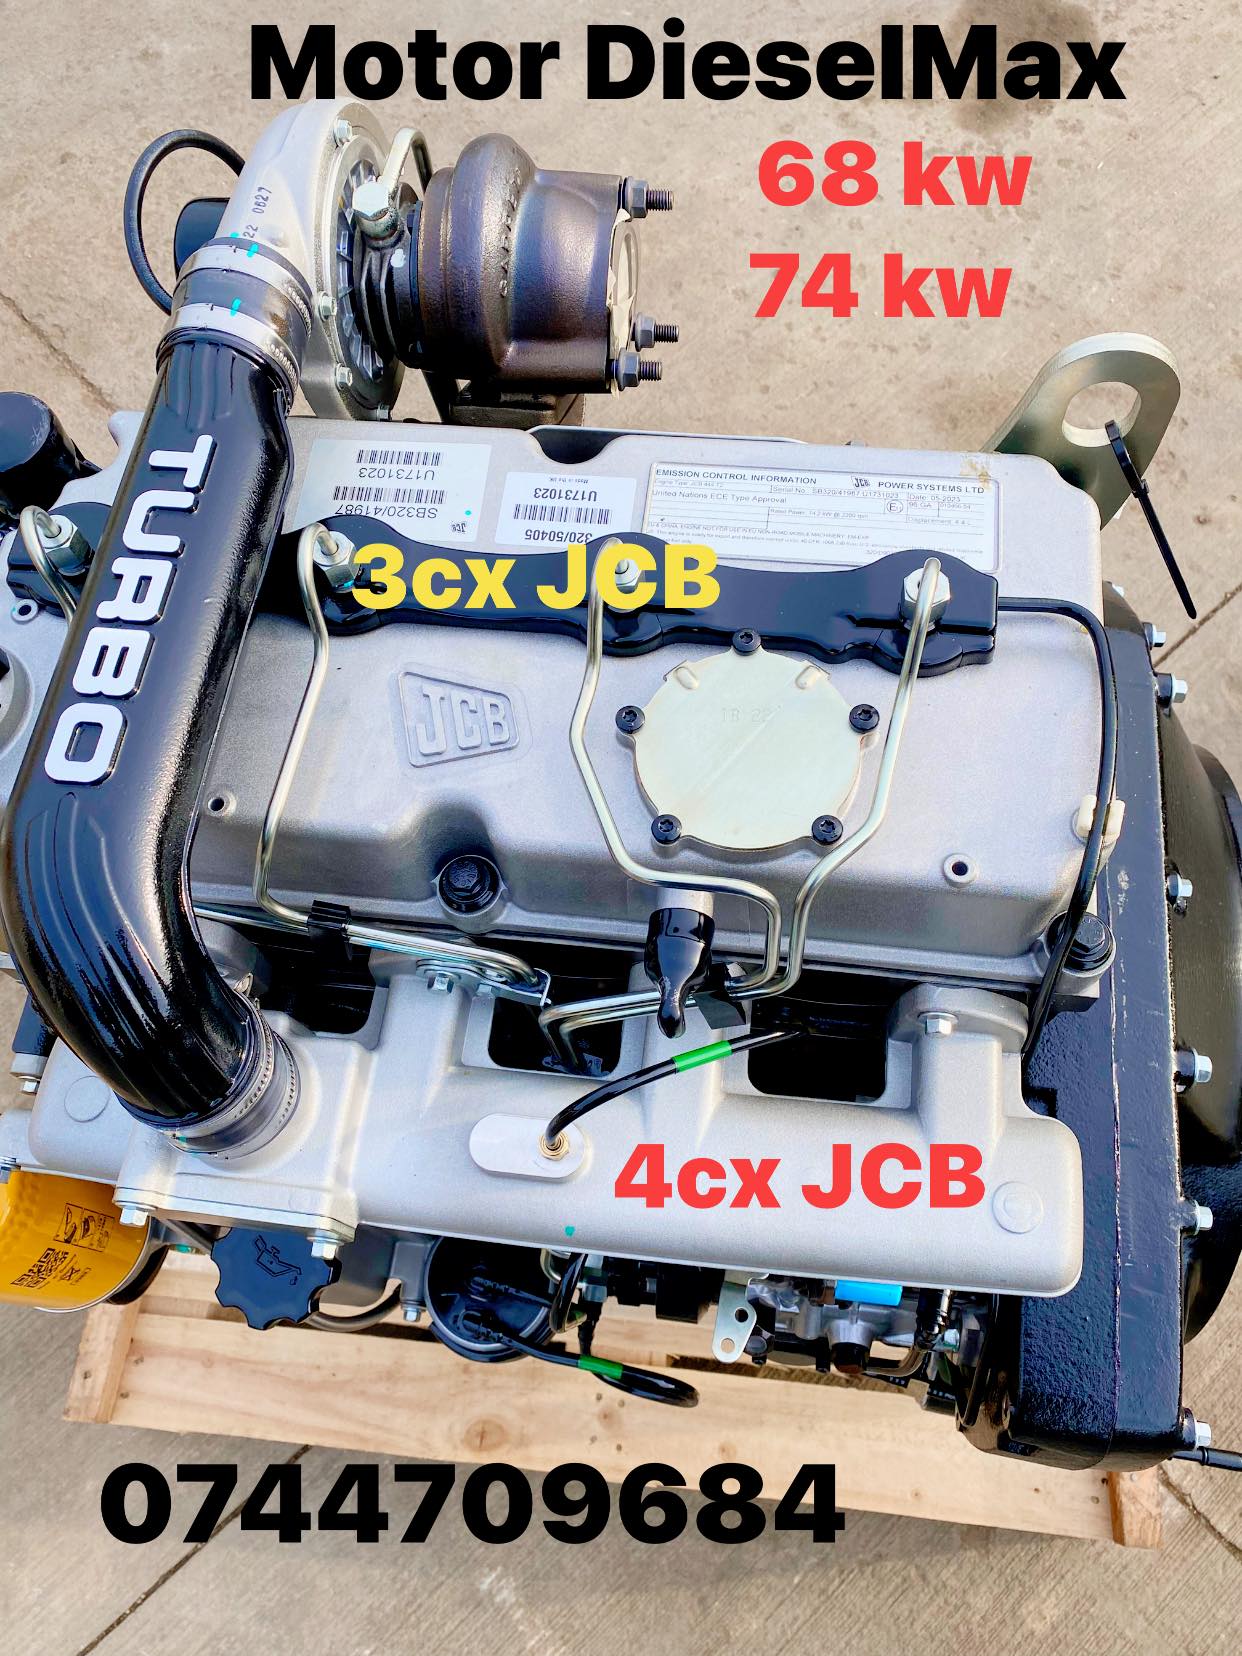 Motor DieselMax pentru 3CX SI 4CX JCB